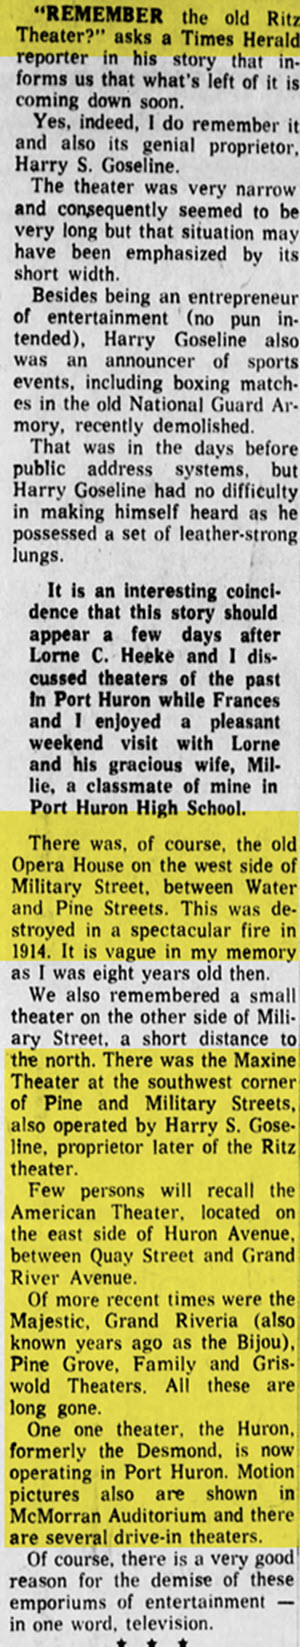 Sun Dec 1969 article about port huron theaters Maxine Theatre, Port Huron